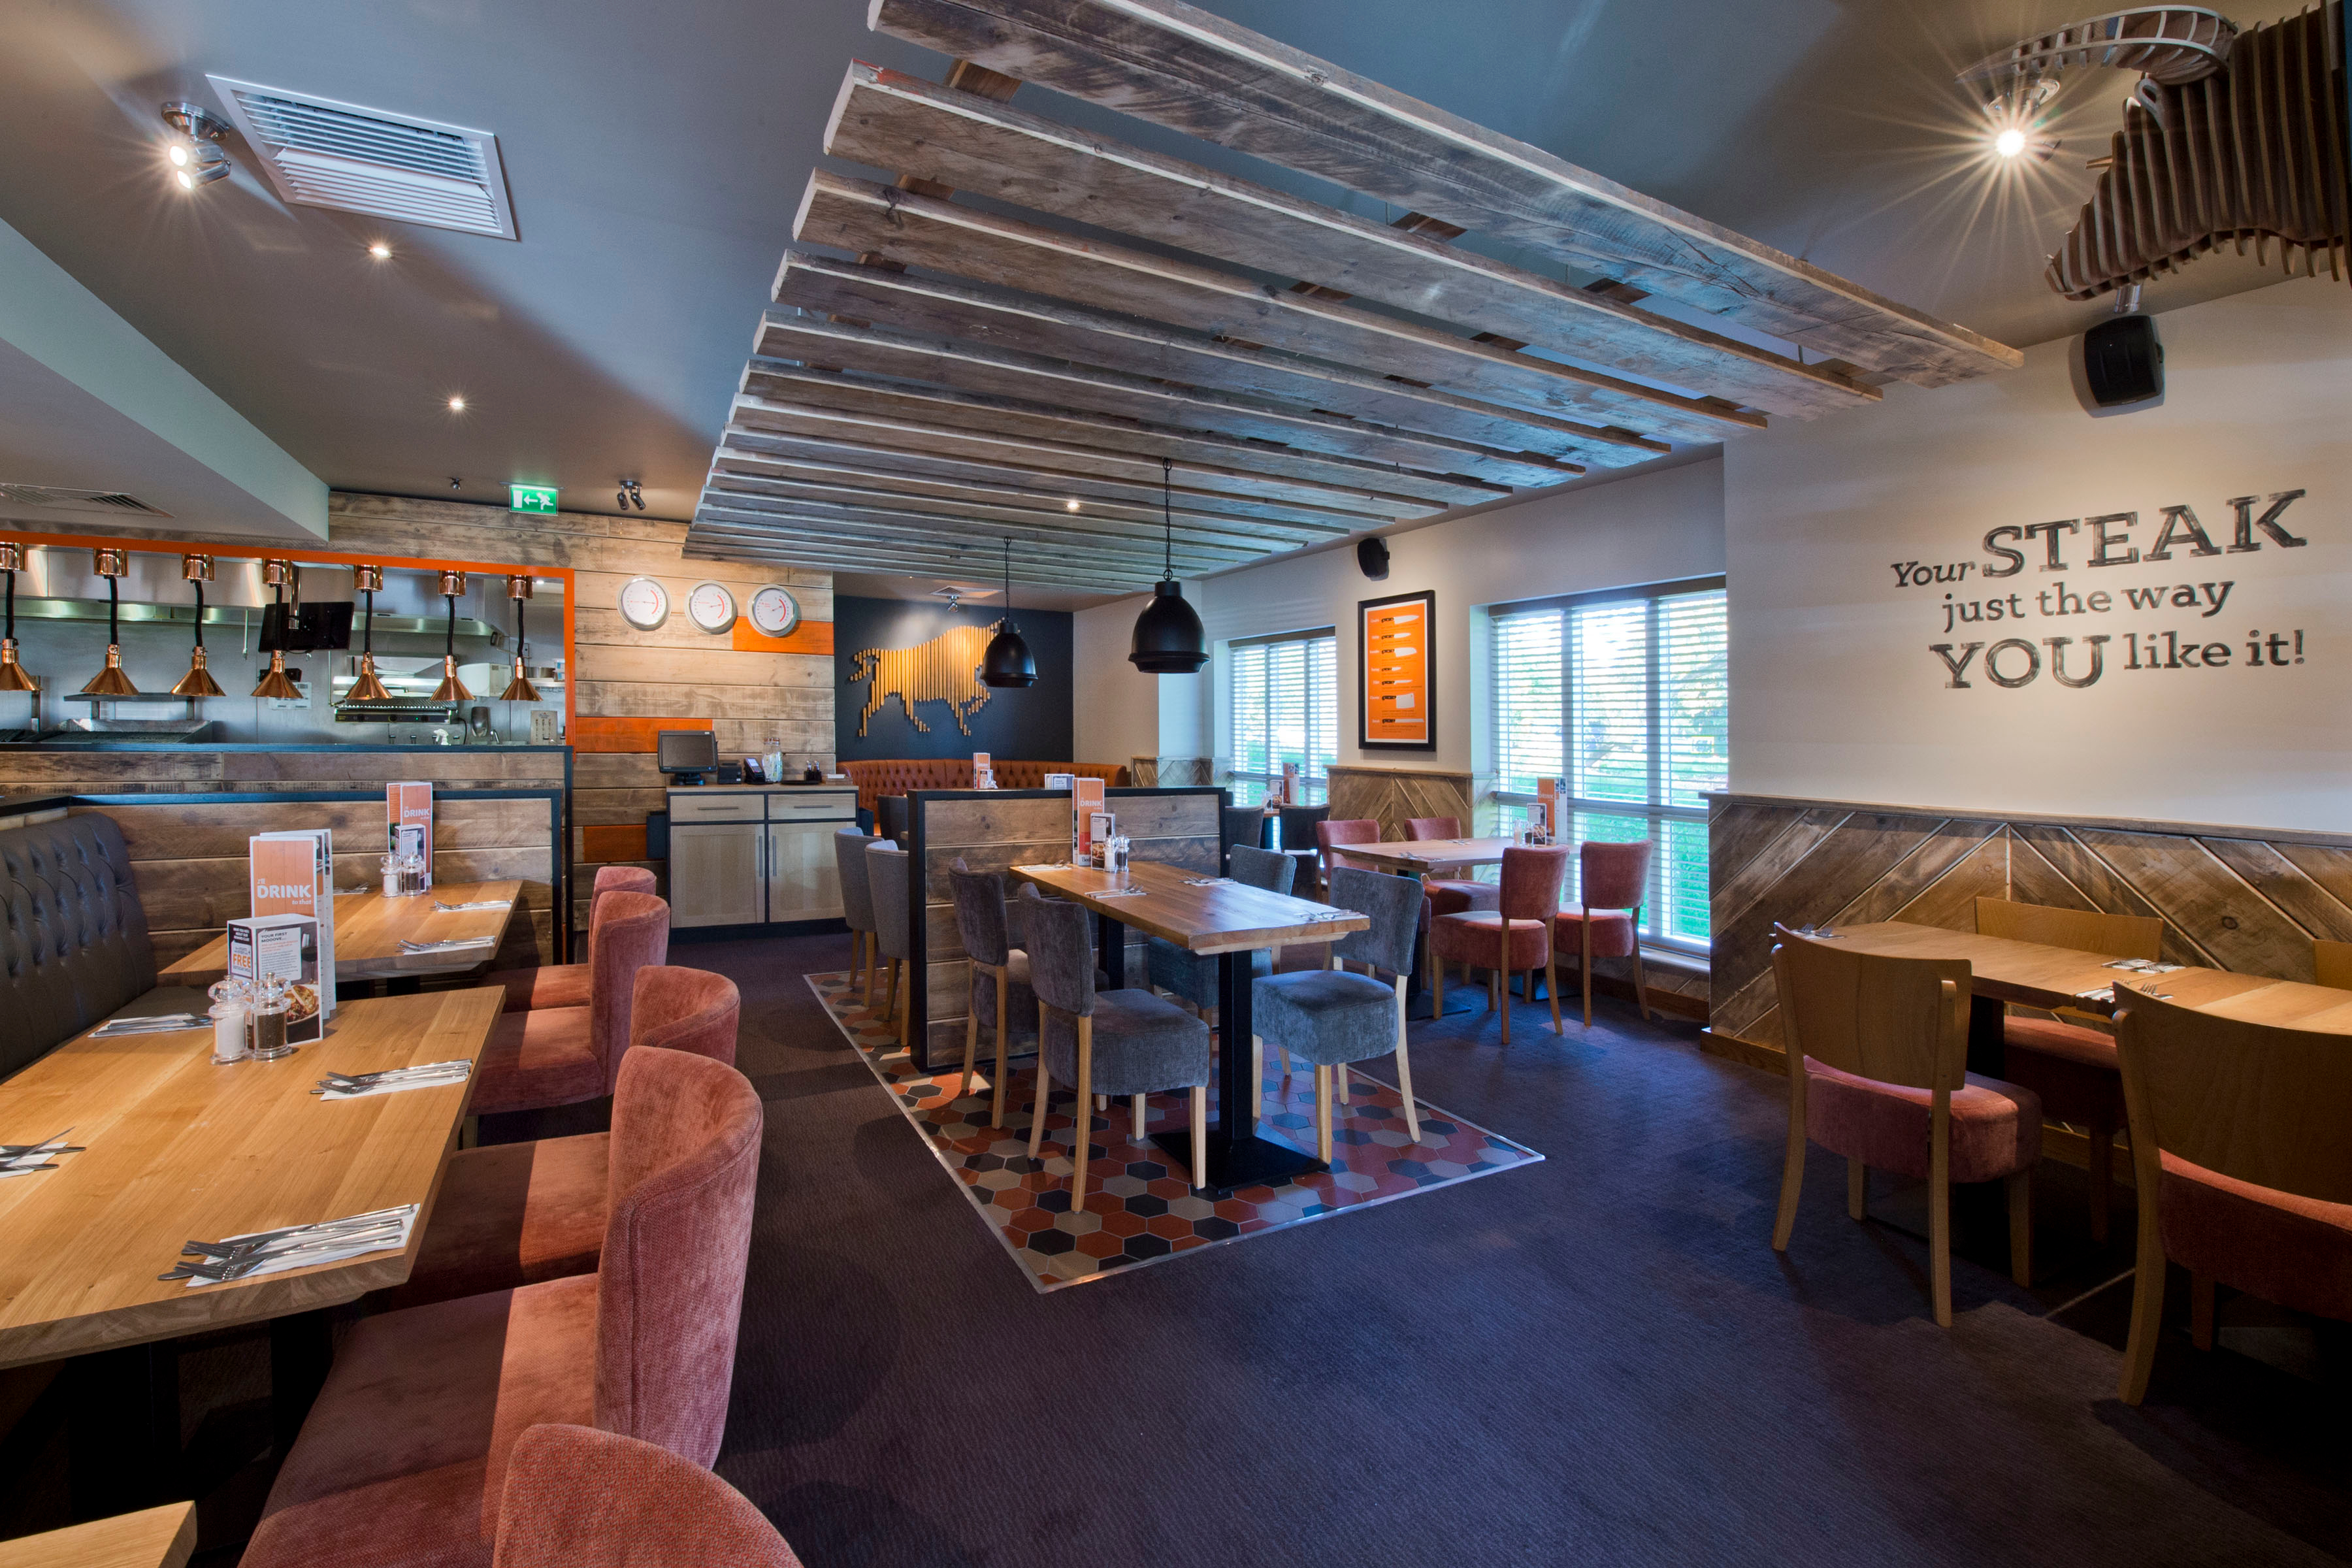 Cirencester Beefeater restaurant interior Cirencester Beefeater Cirencester 01285 708047